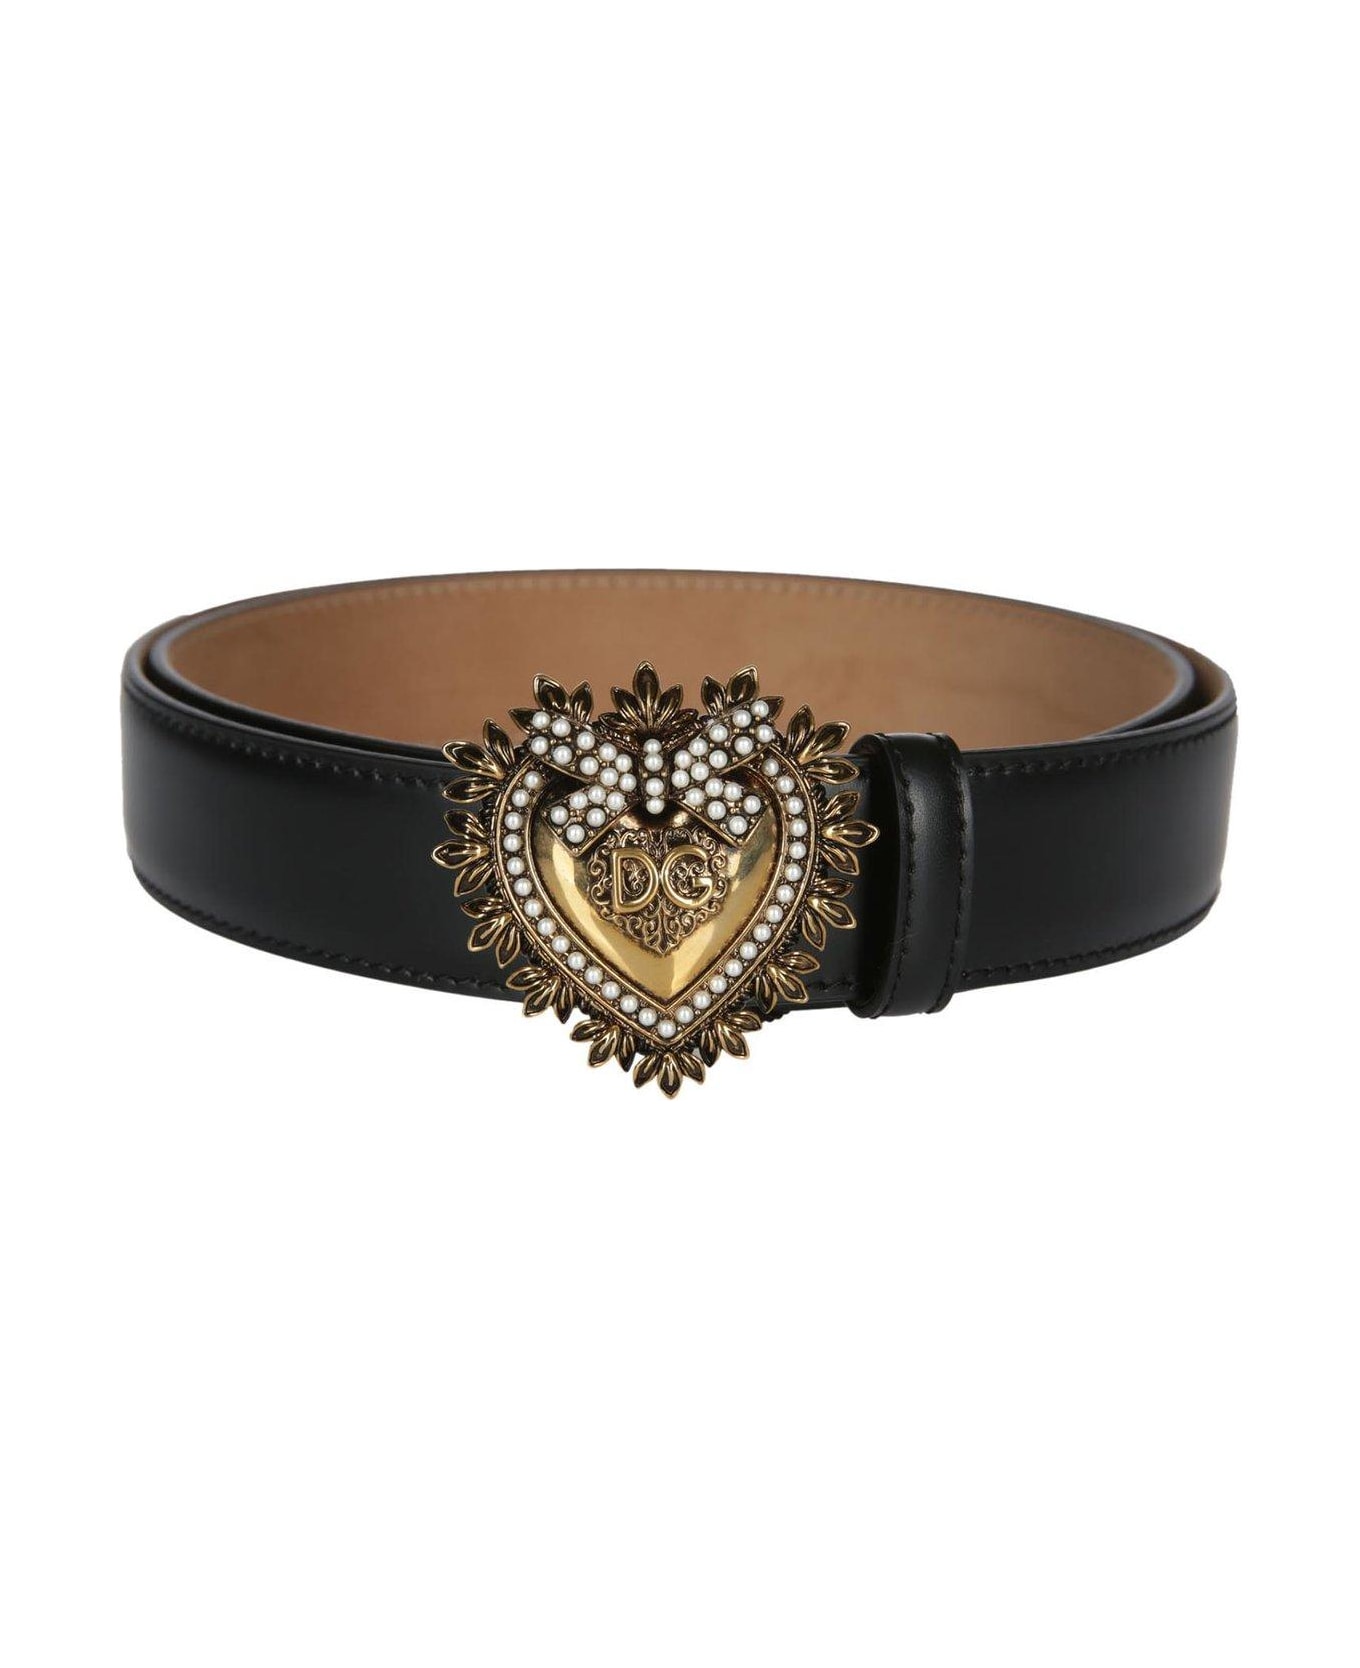 Dolce & Gabbana Devotion Buckle Belt